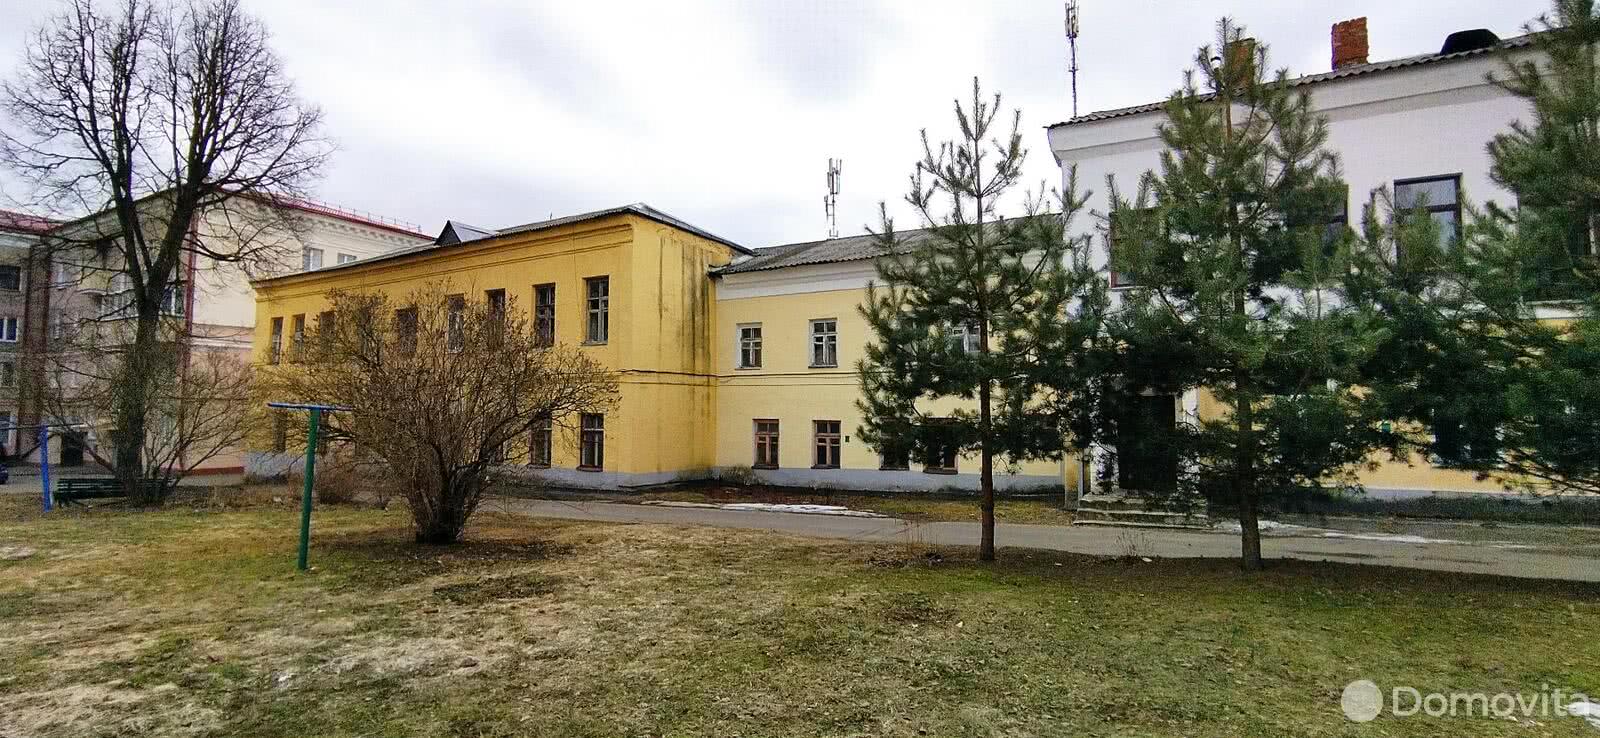 квартира, Витебск, ул. Янки Купалы, д. 5, стоимость продажи 133 173 р.